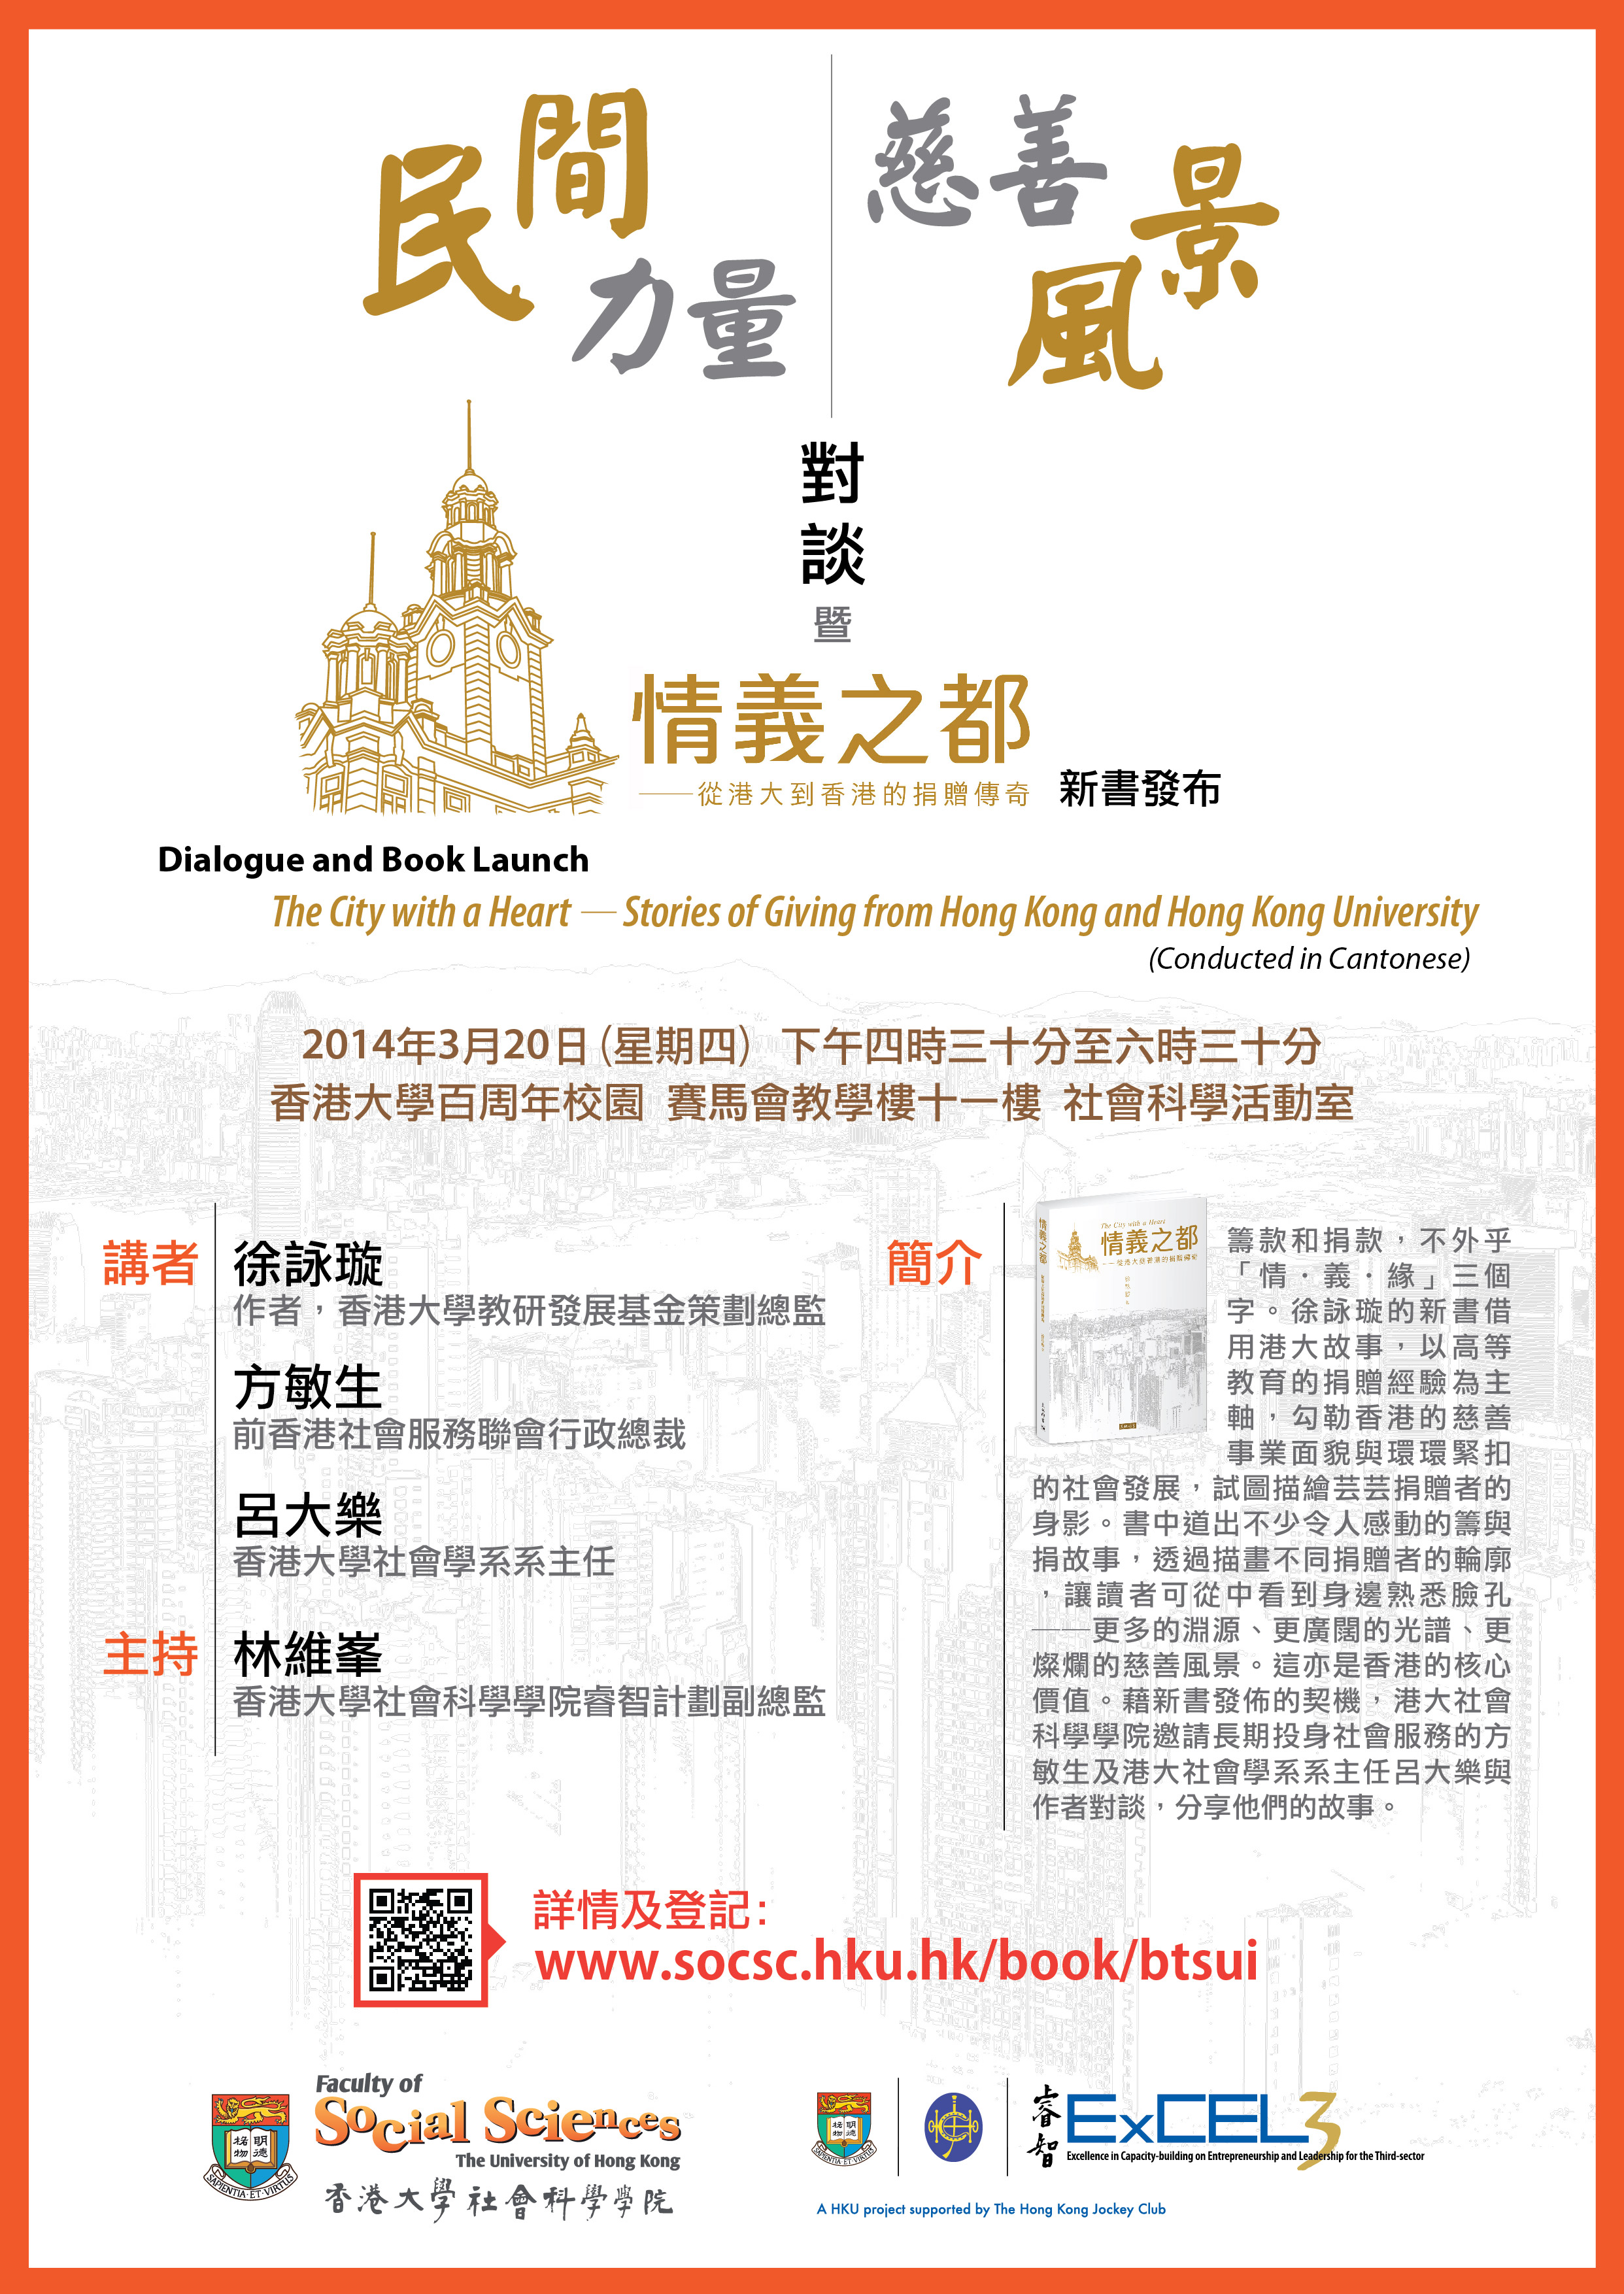 Stories of Giving from HK and HKU 《民間力量 慈善風景》對談 暨《情義之都——從港大到香港的捐贈傳奇》新書發布